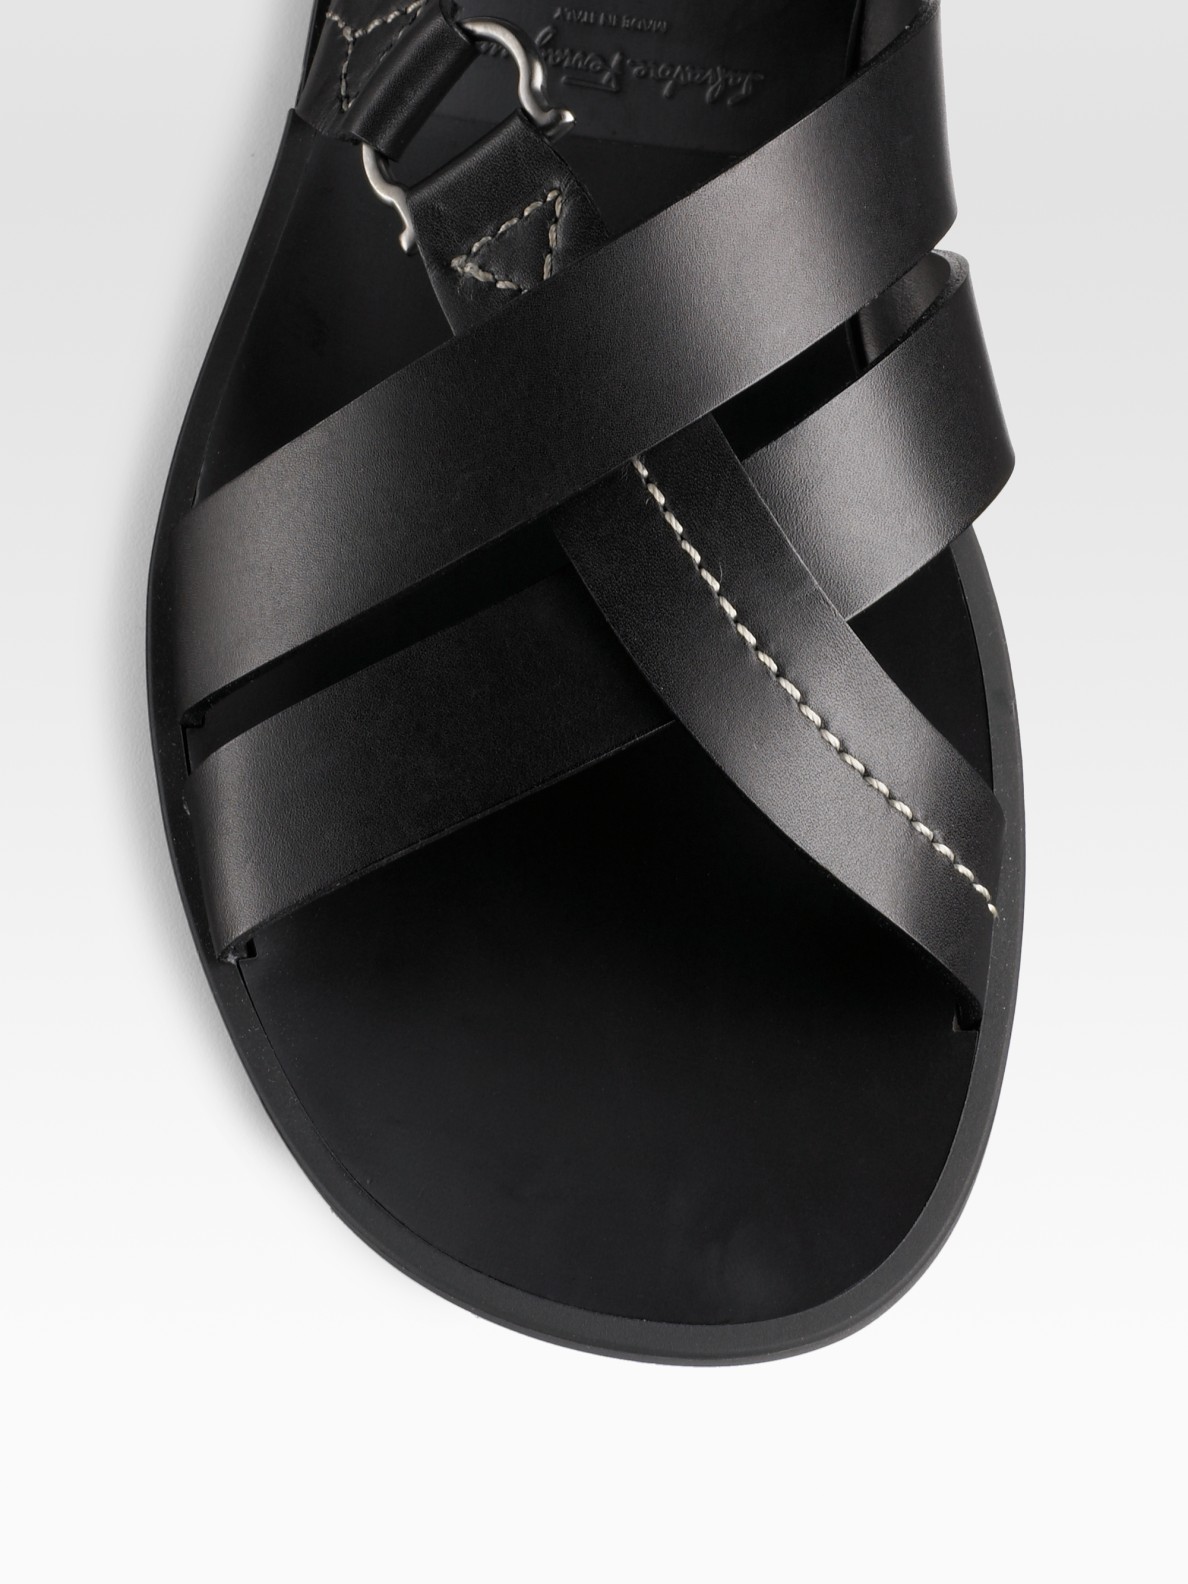 Ferragamo Leather Sandals in Nero (Black) for Men - Lyst